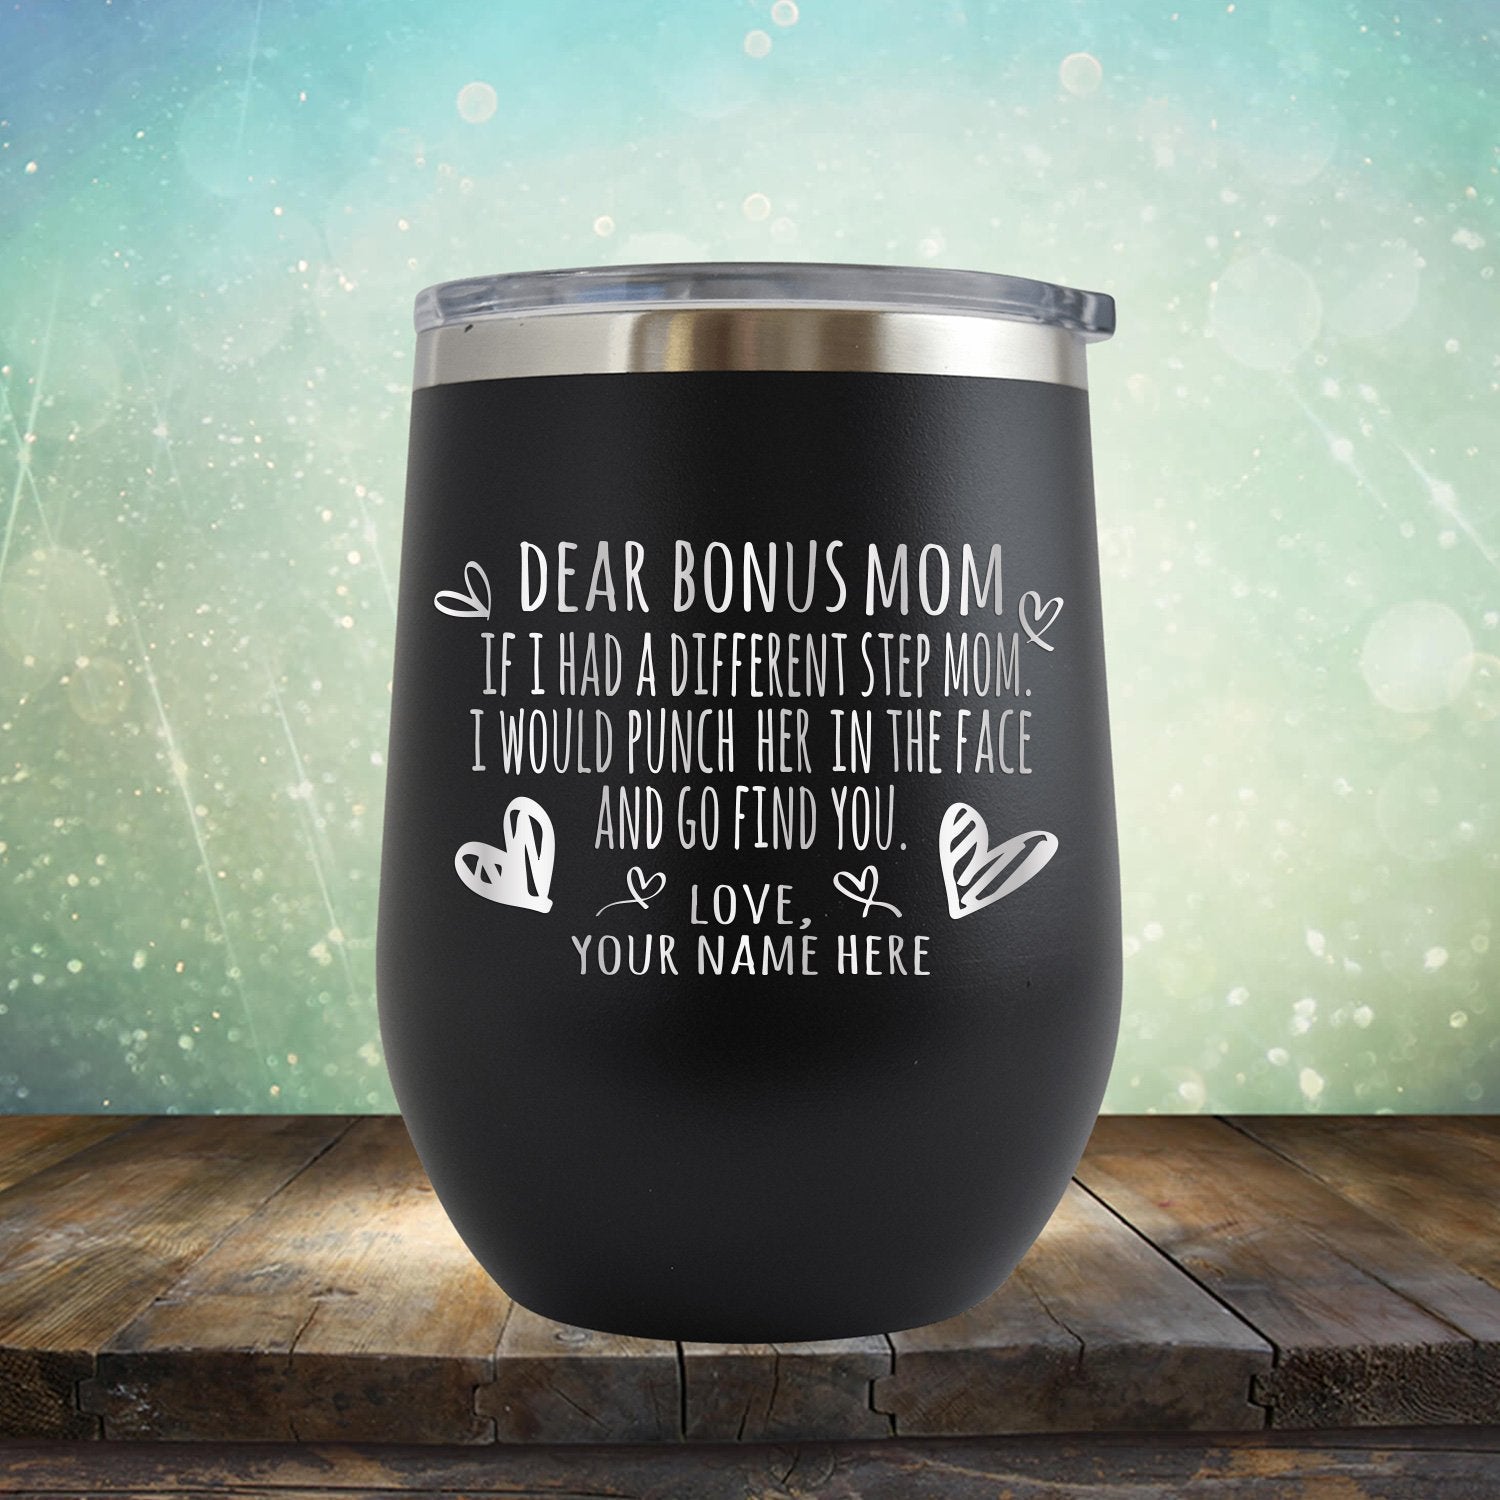 Best Bonus Mom Wine Cup, Personalized Stepmom Gift for Wedding